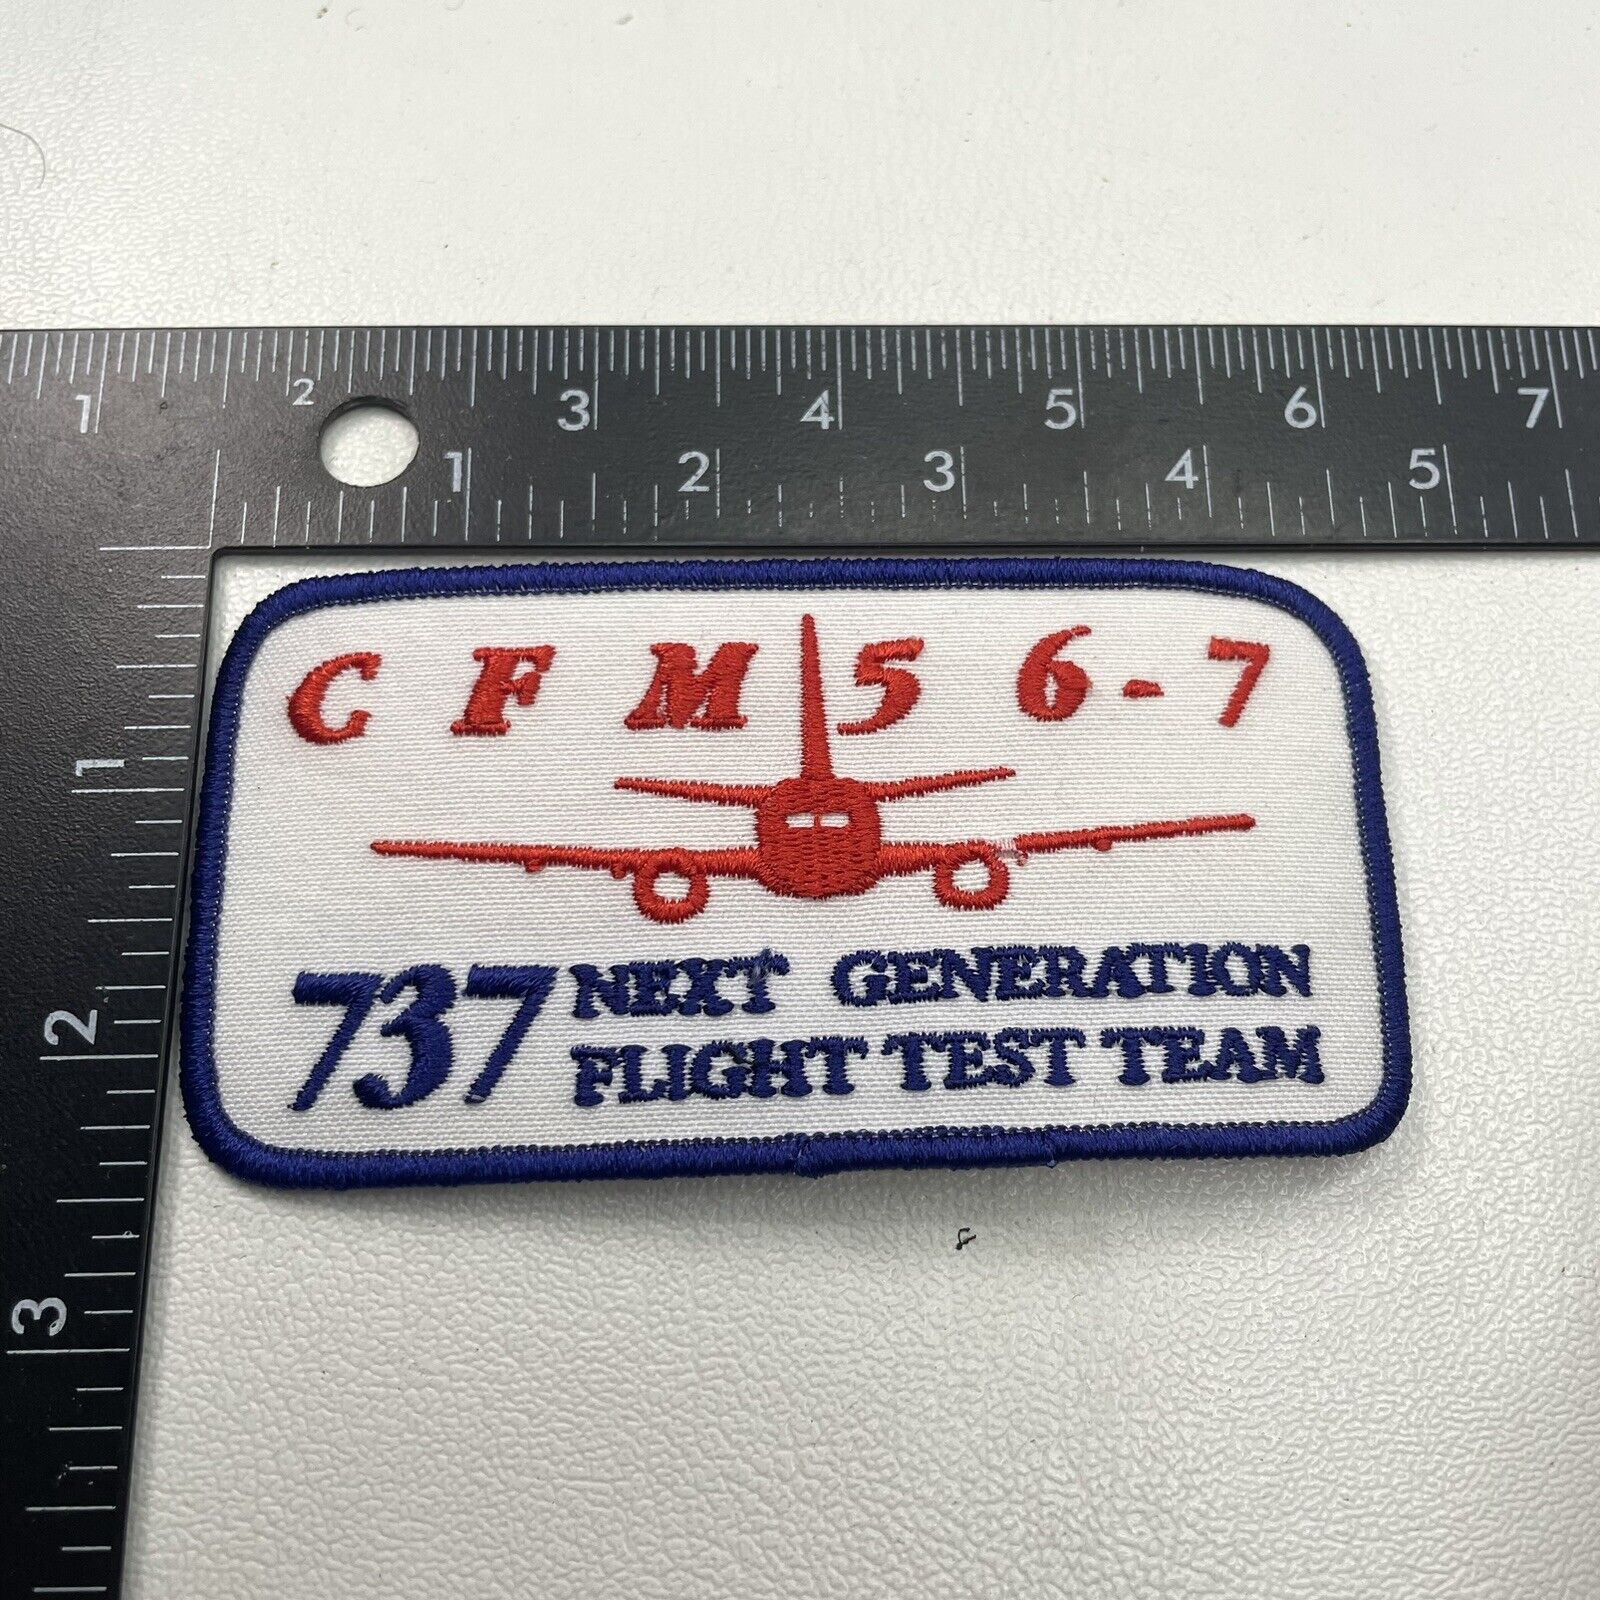 CFM 5 6-7 737 NEXT GENERATION FLIGHT TEST TEAM Patch (Airplane Related) 32R6